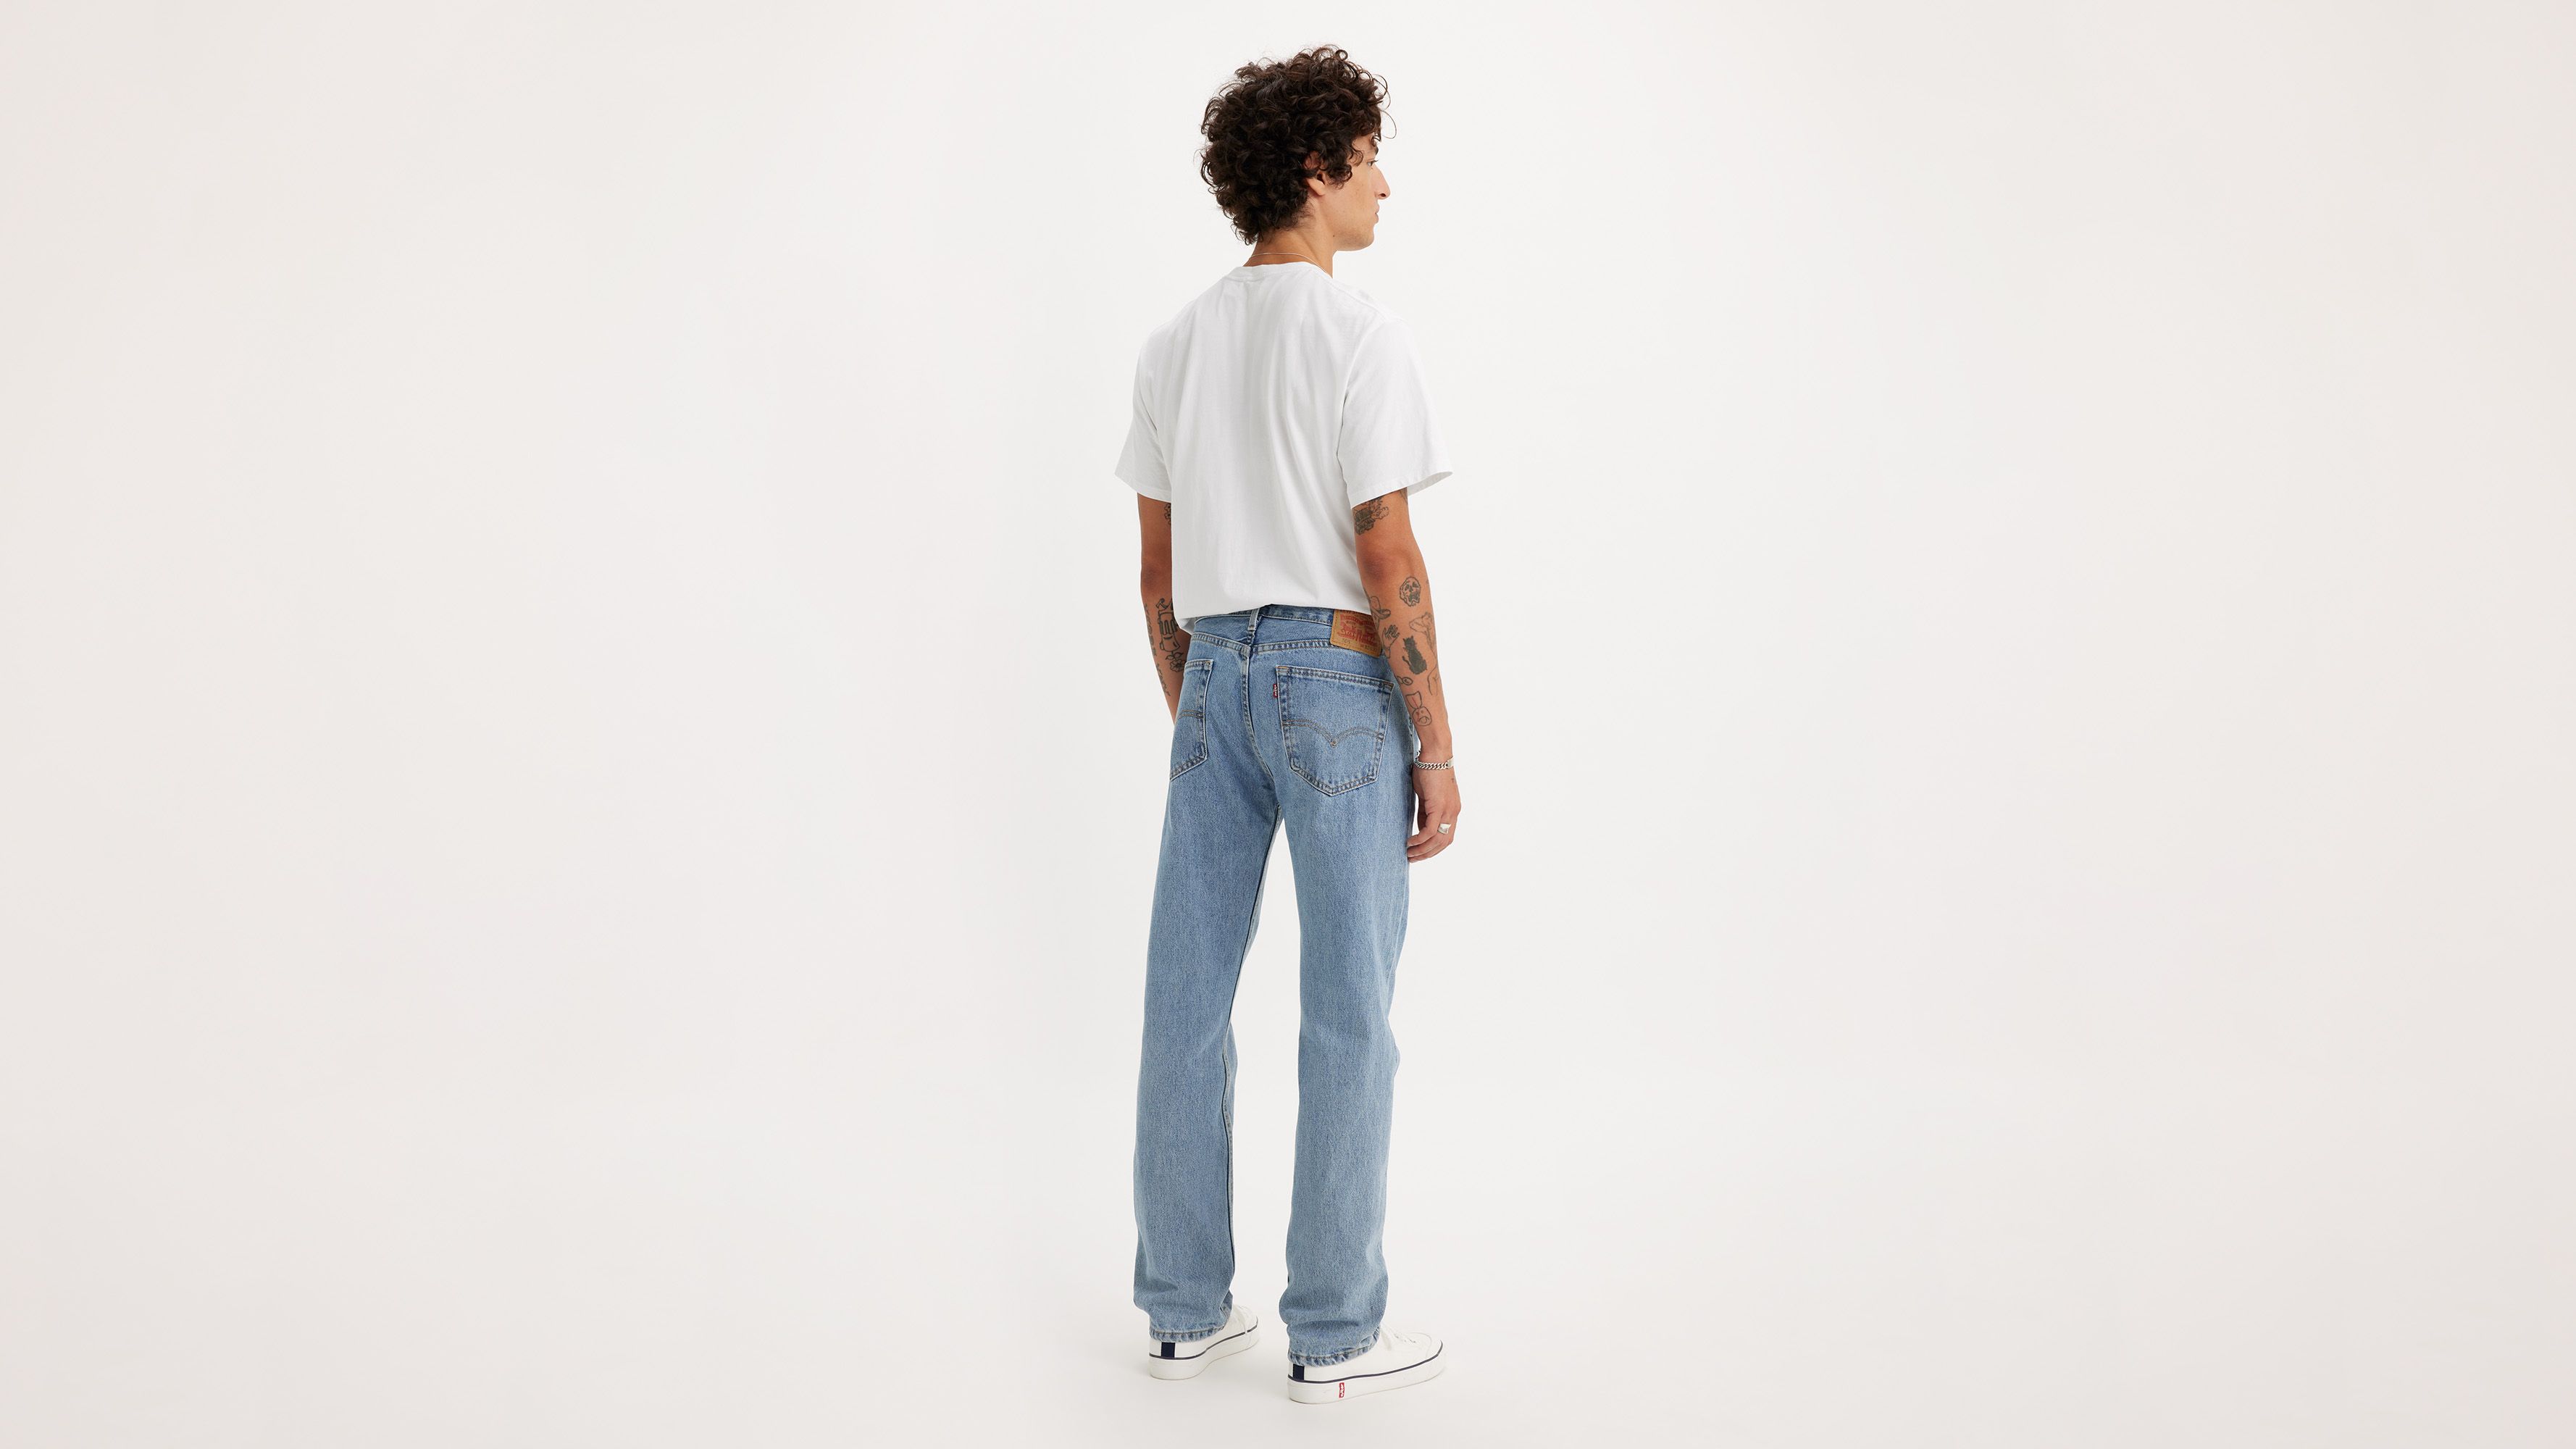 levi's 505 regular fit stretch jeans